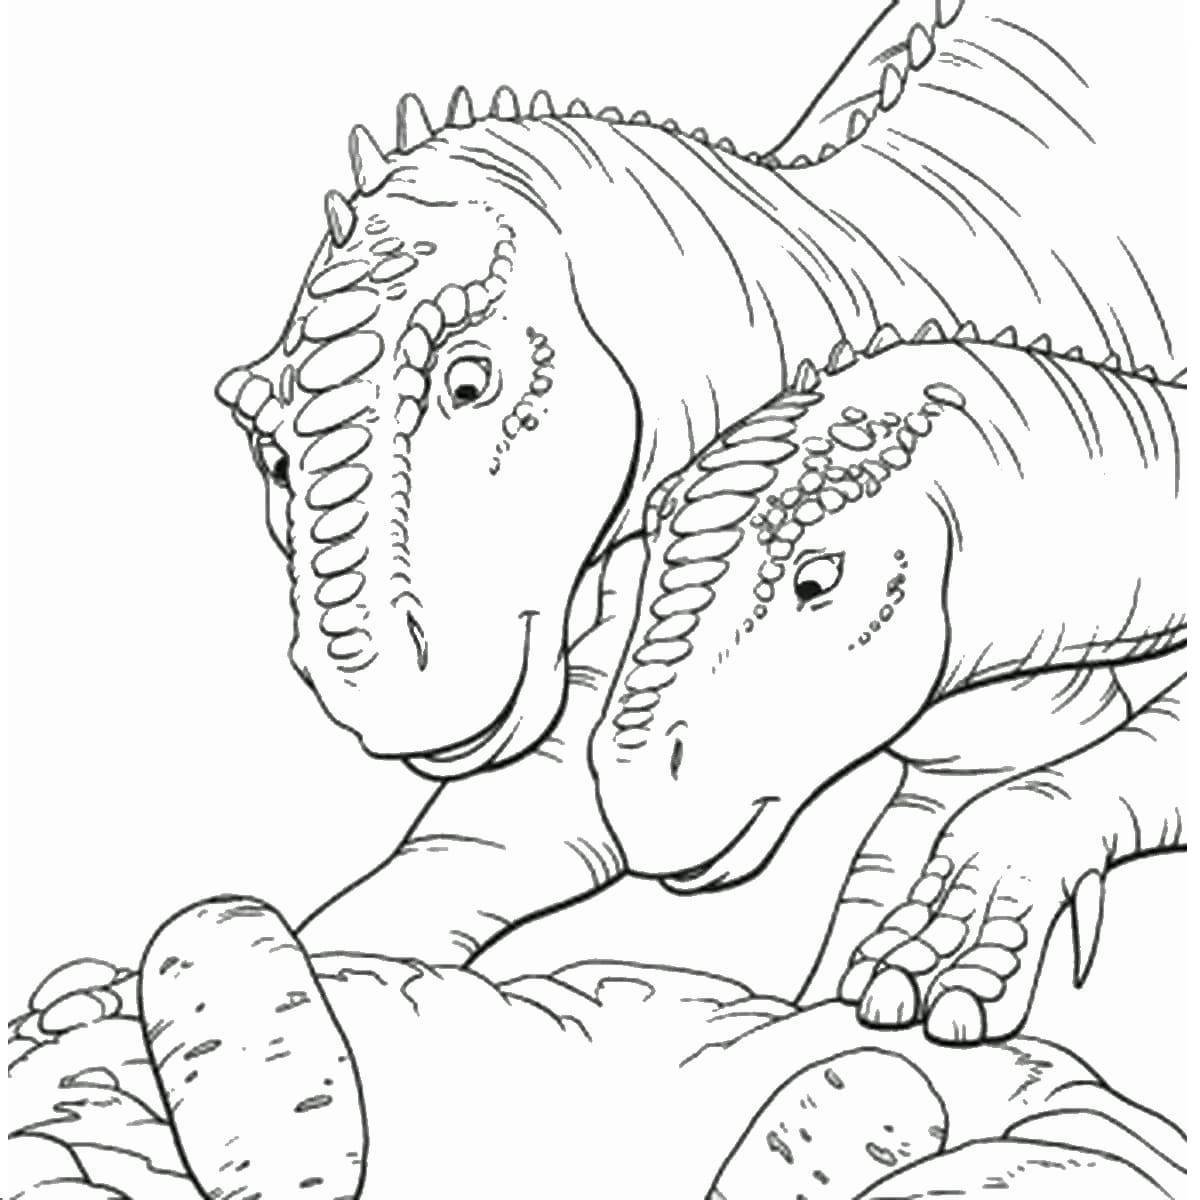 Bold Jurassic World coloring book